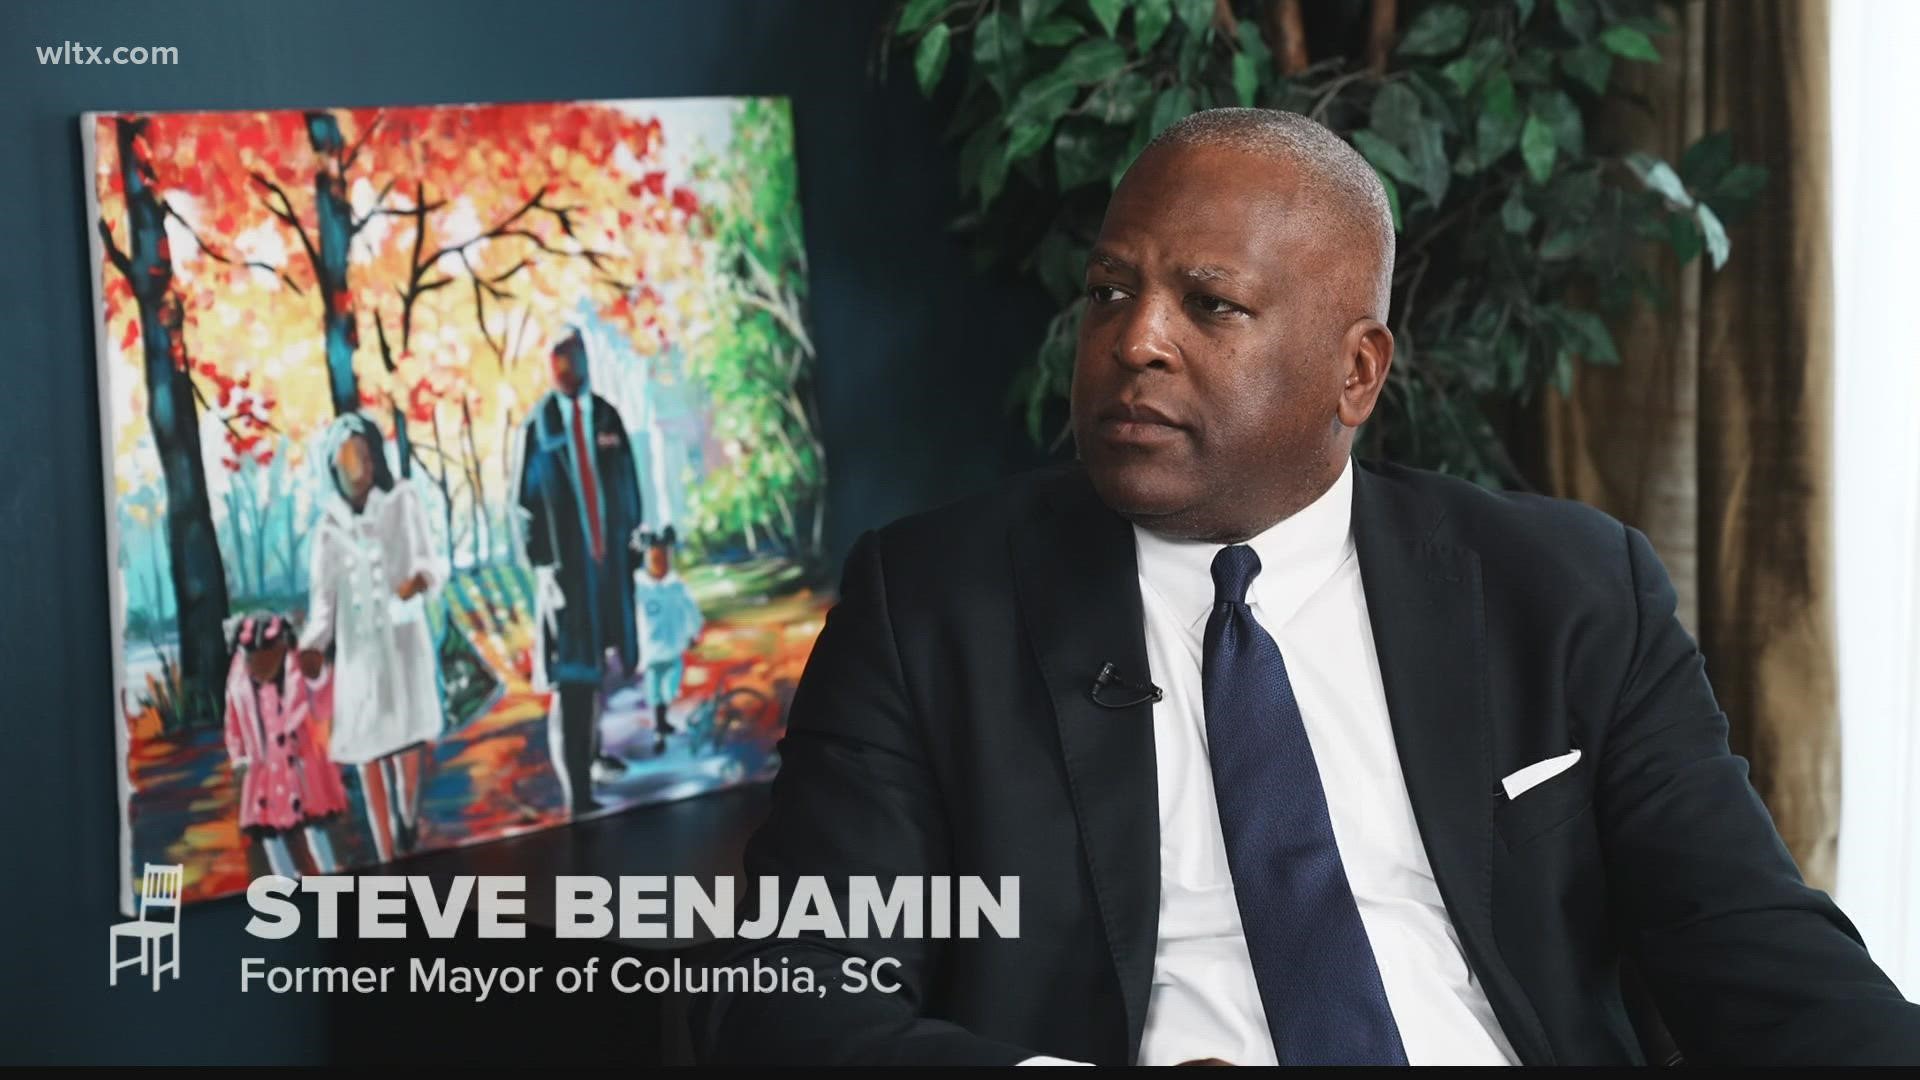 Steve Benjamin was Columbia's first Black mayor.